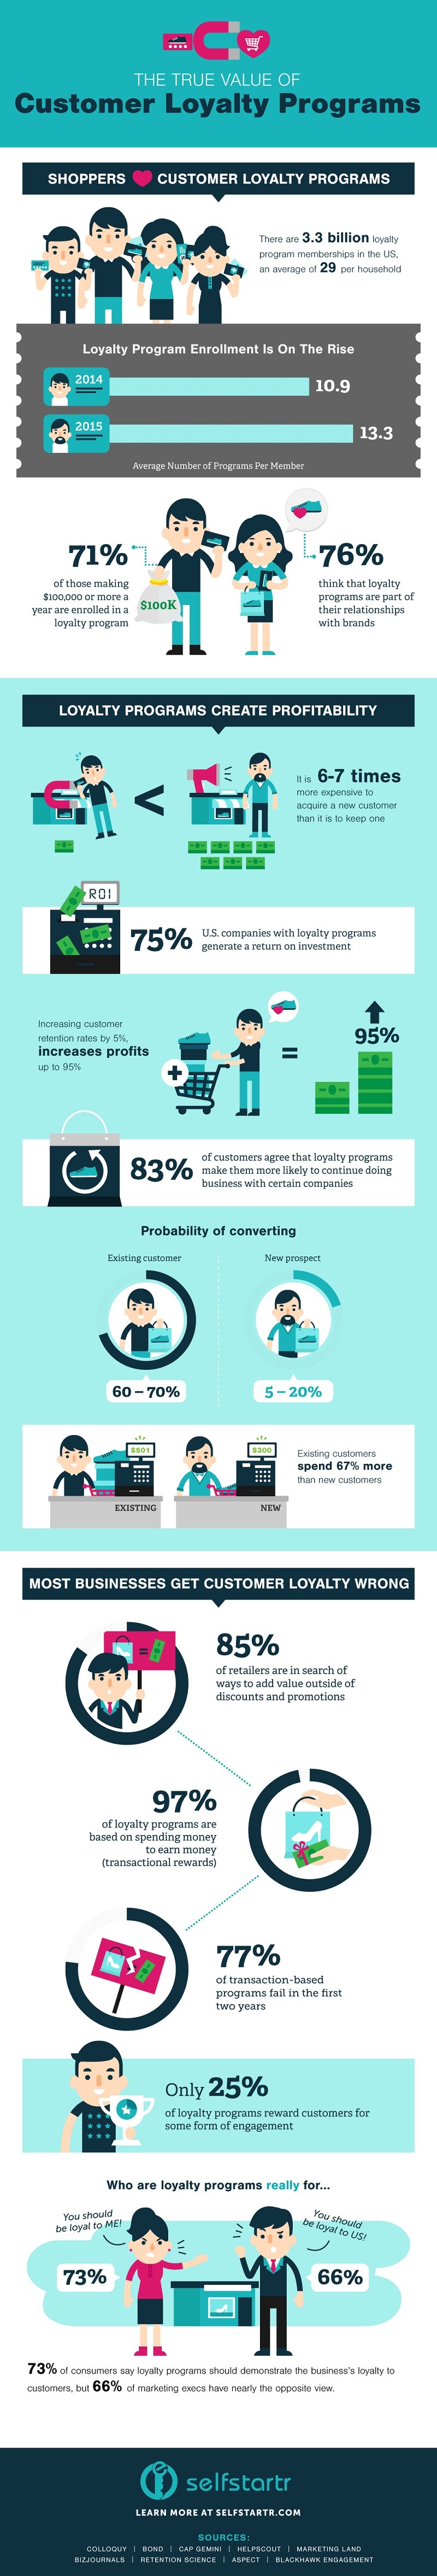 customer-loyalty-programs-infographic.jpg